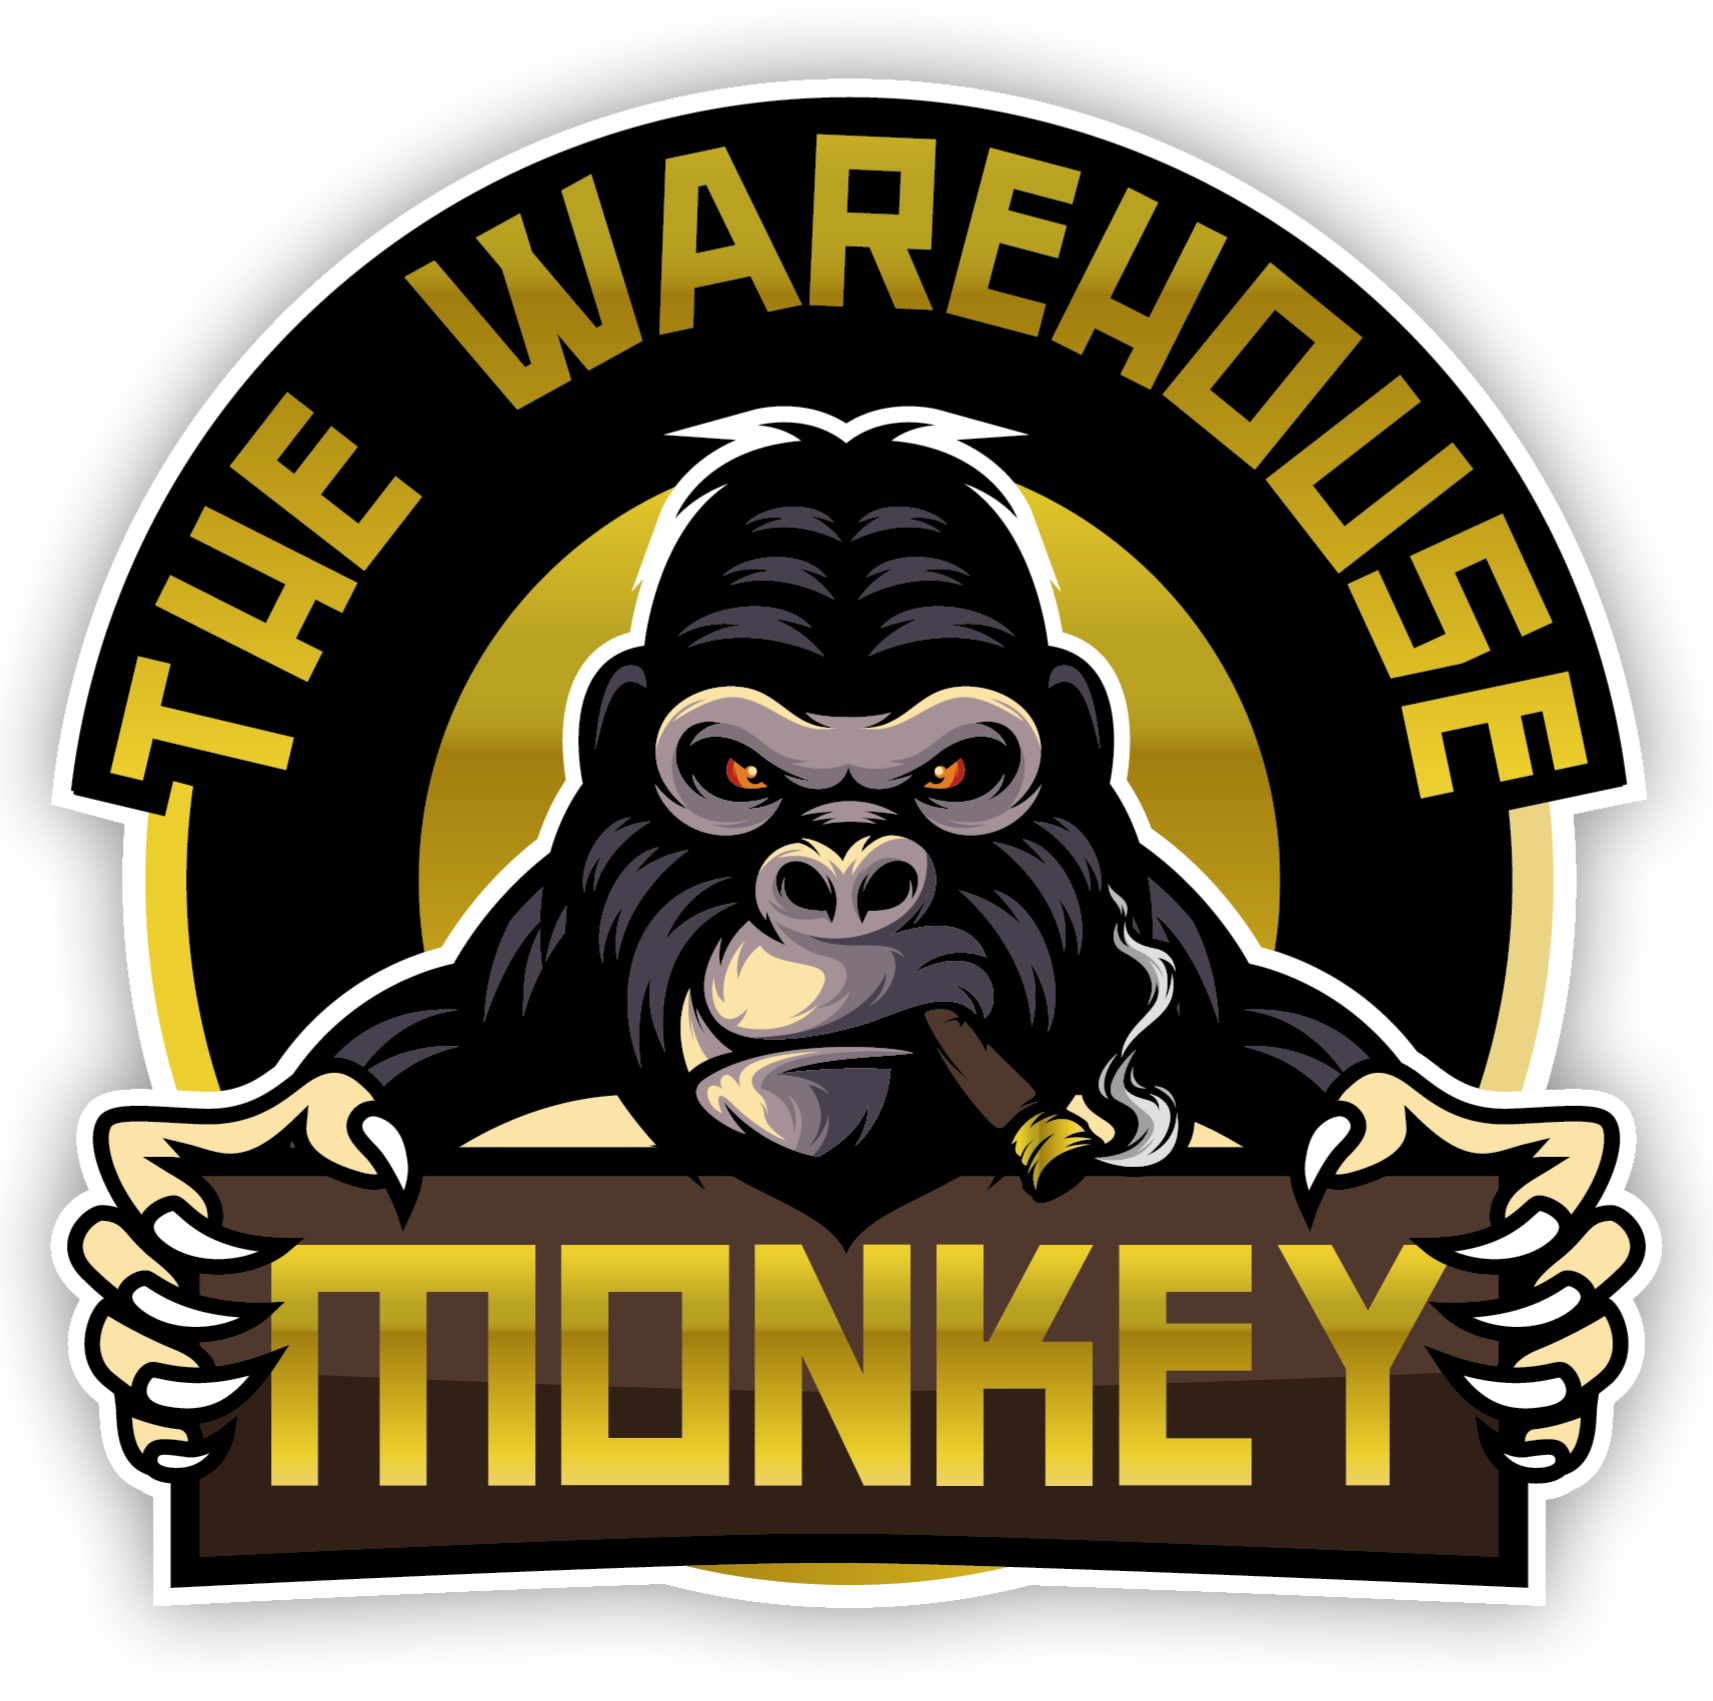 The Warehouse Monkey